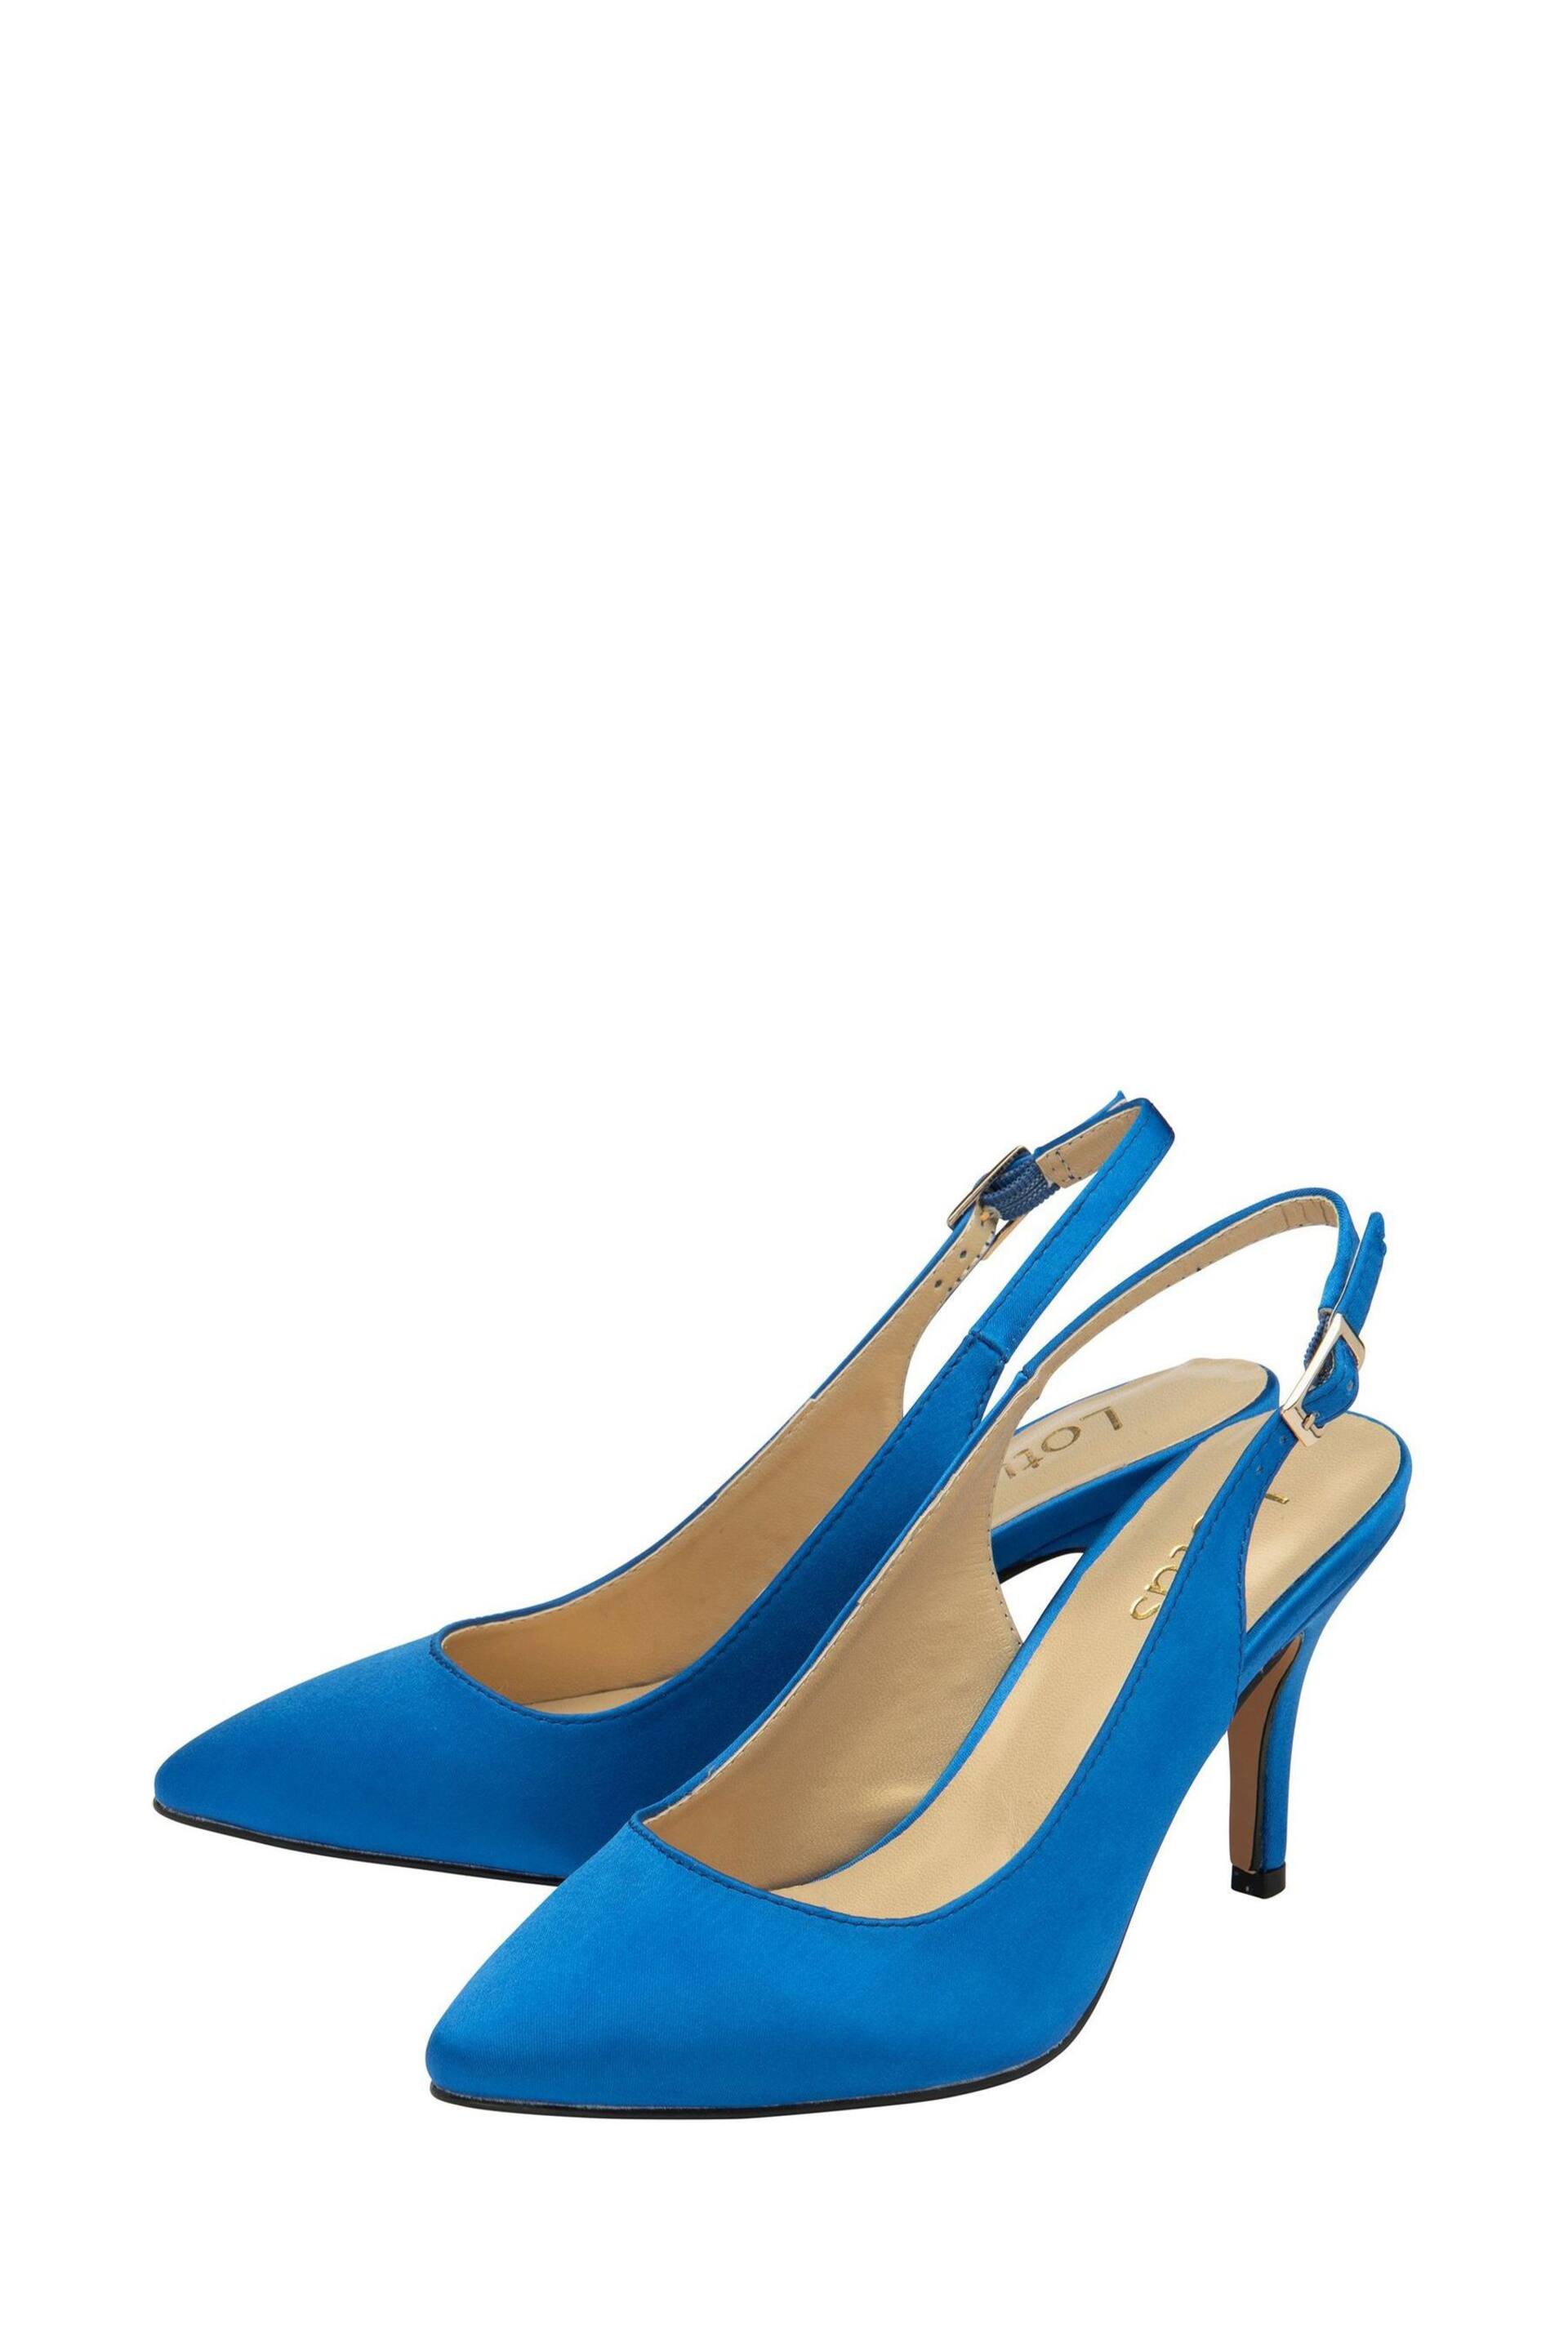 Lotus Blue Slingback Court Shoes - Image 2 of 4